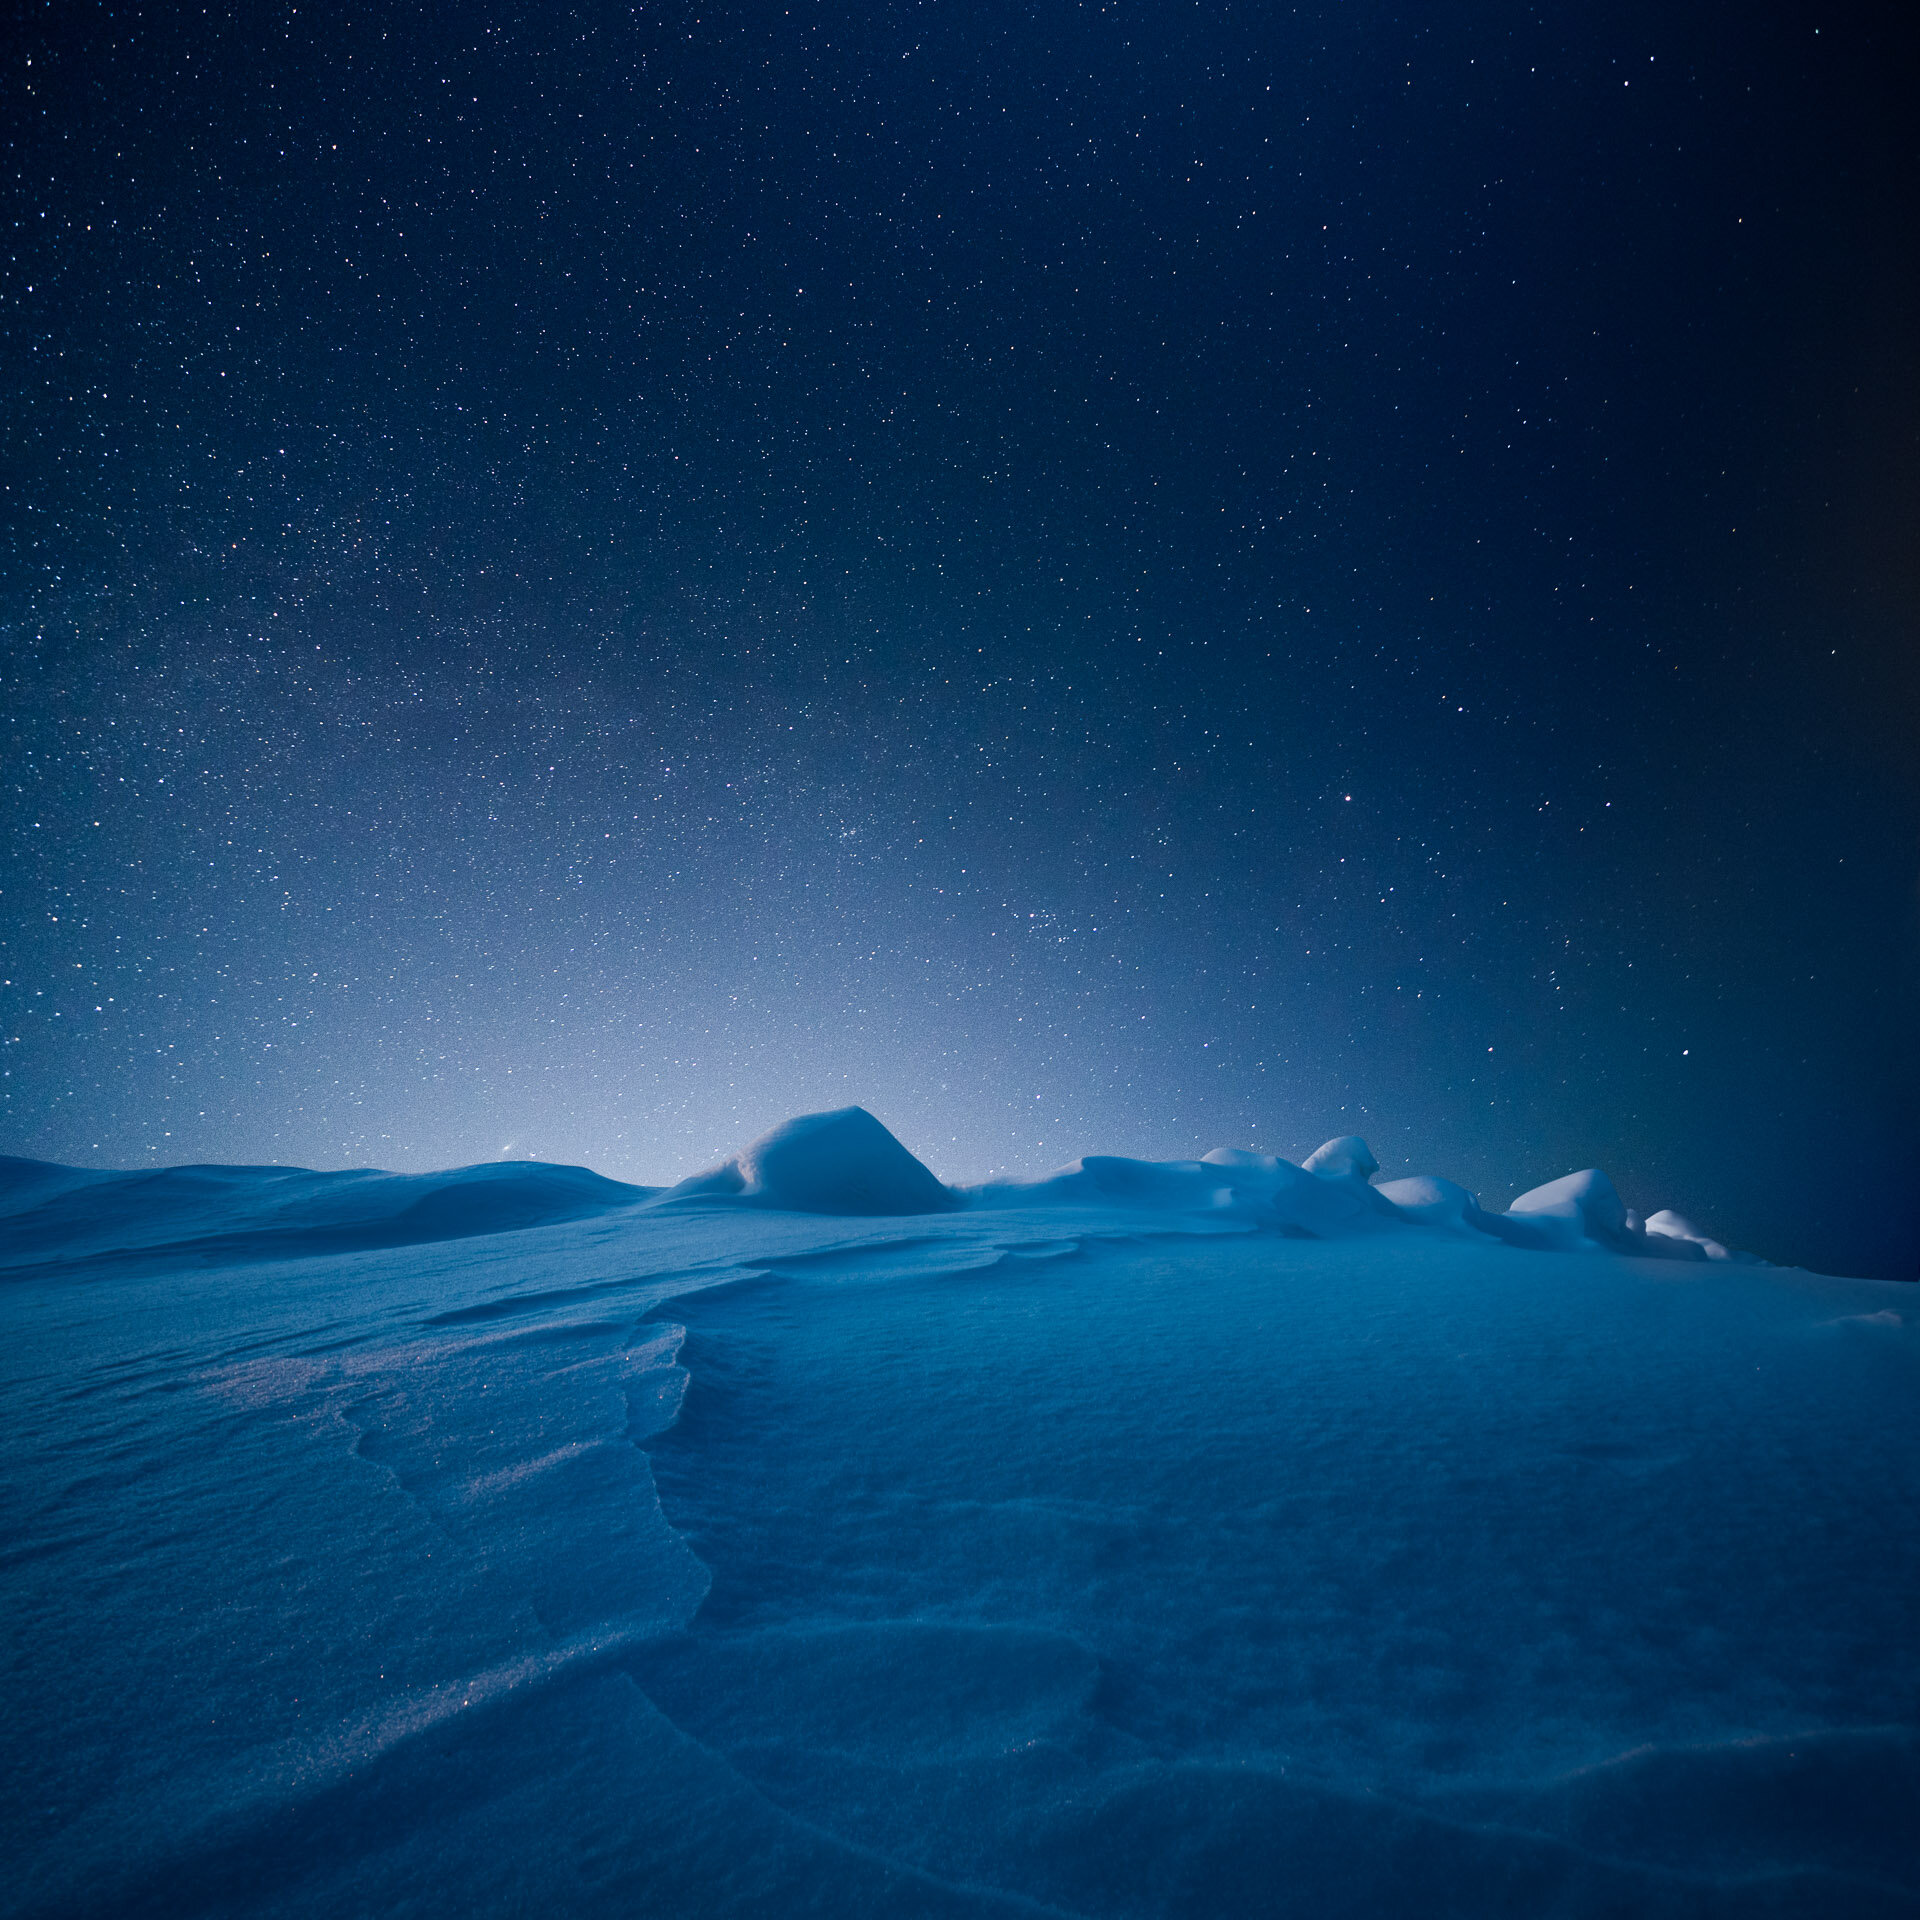 Winter Night Photography Checklist